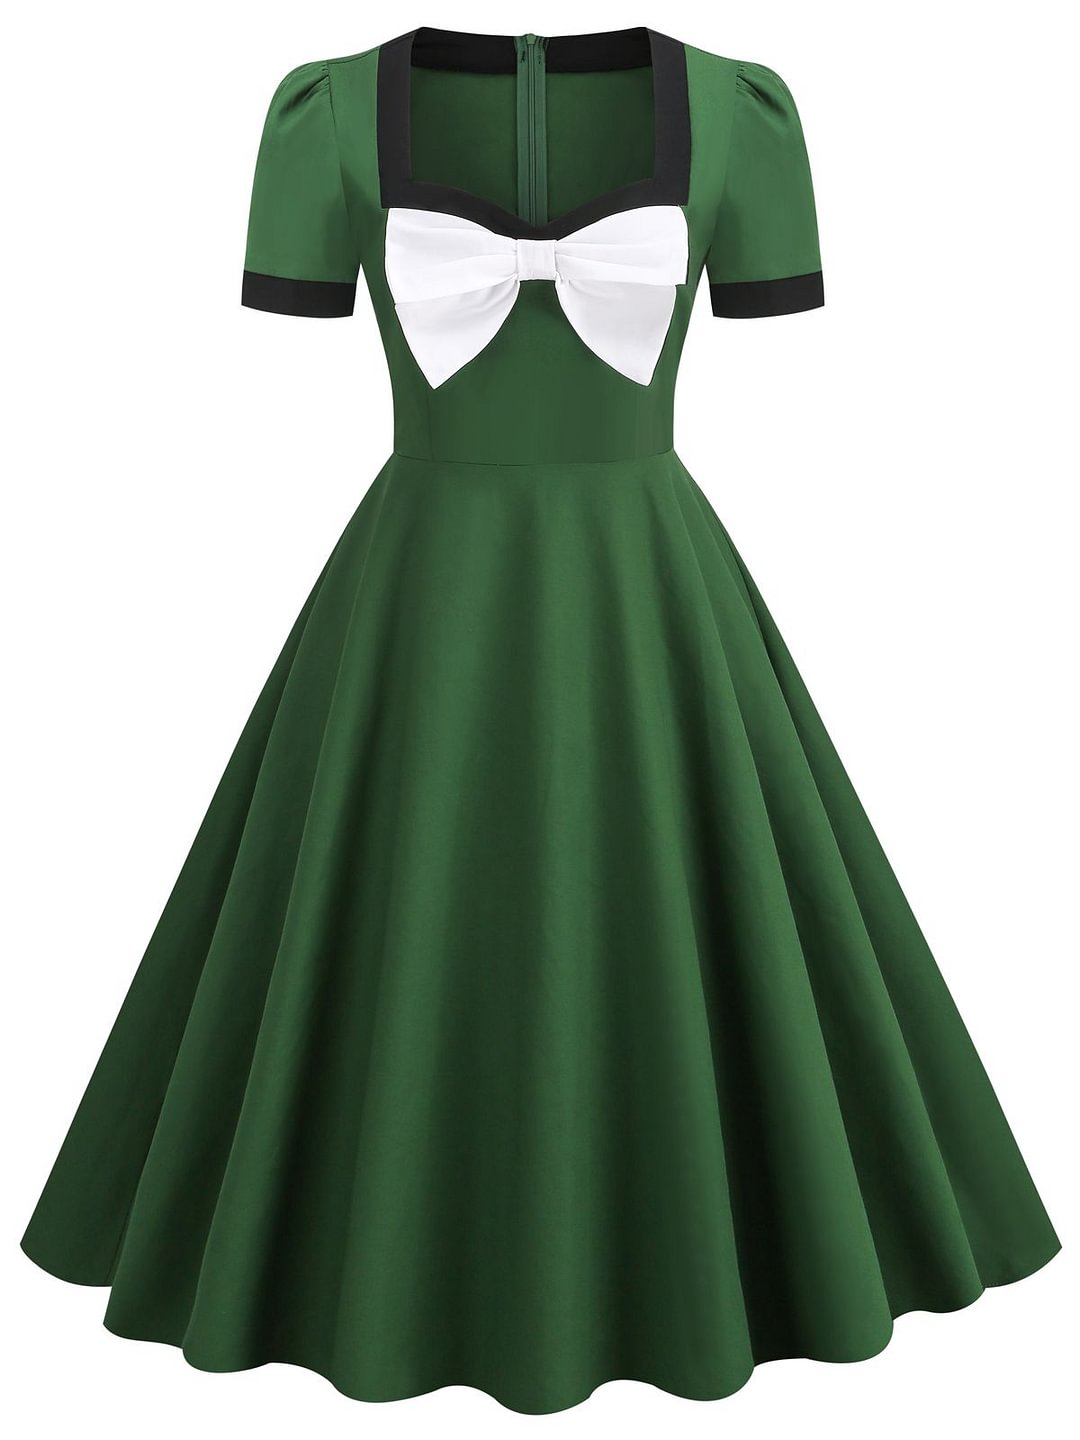 Green 1950s Square-Neck Vintage Swing Dress